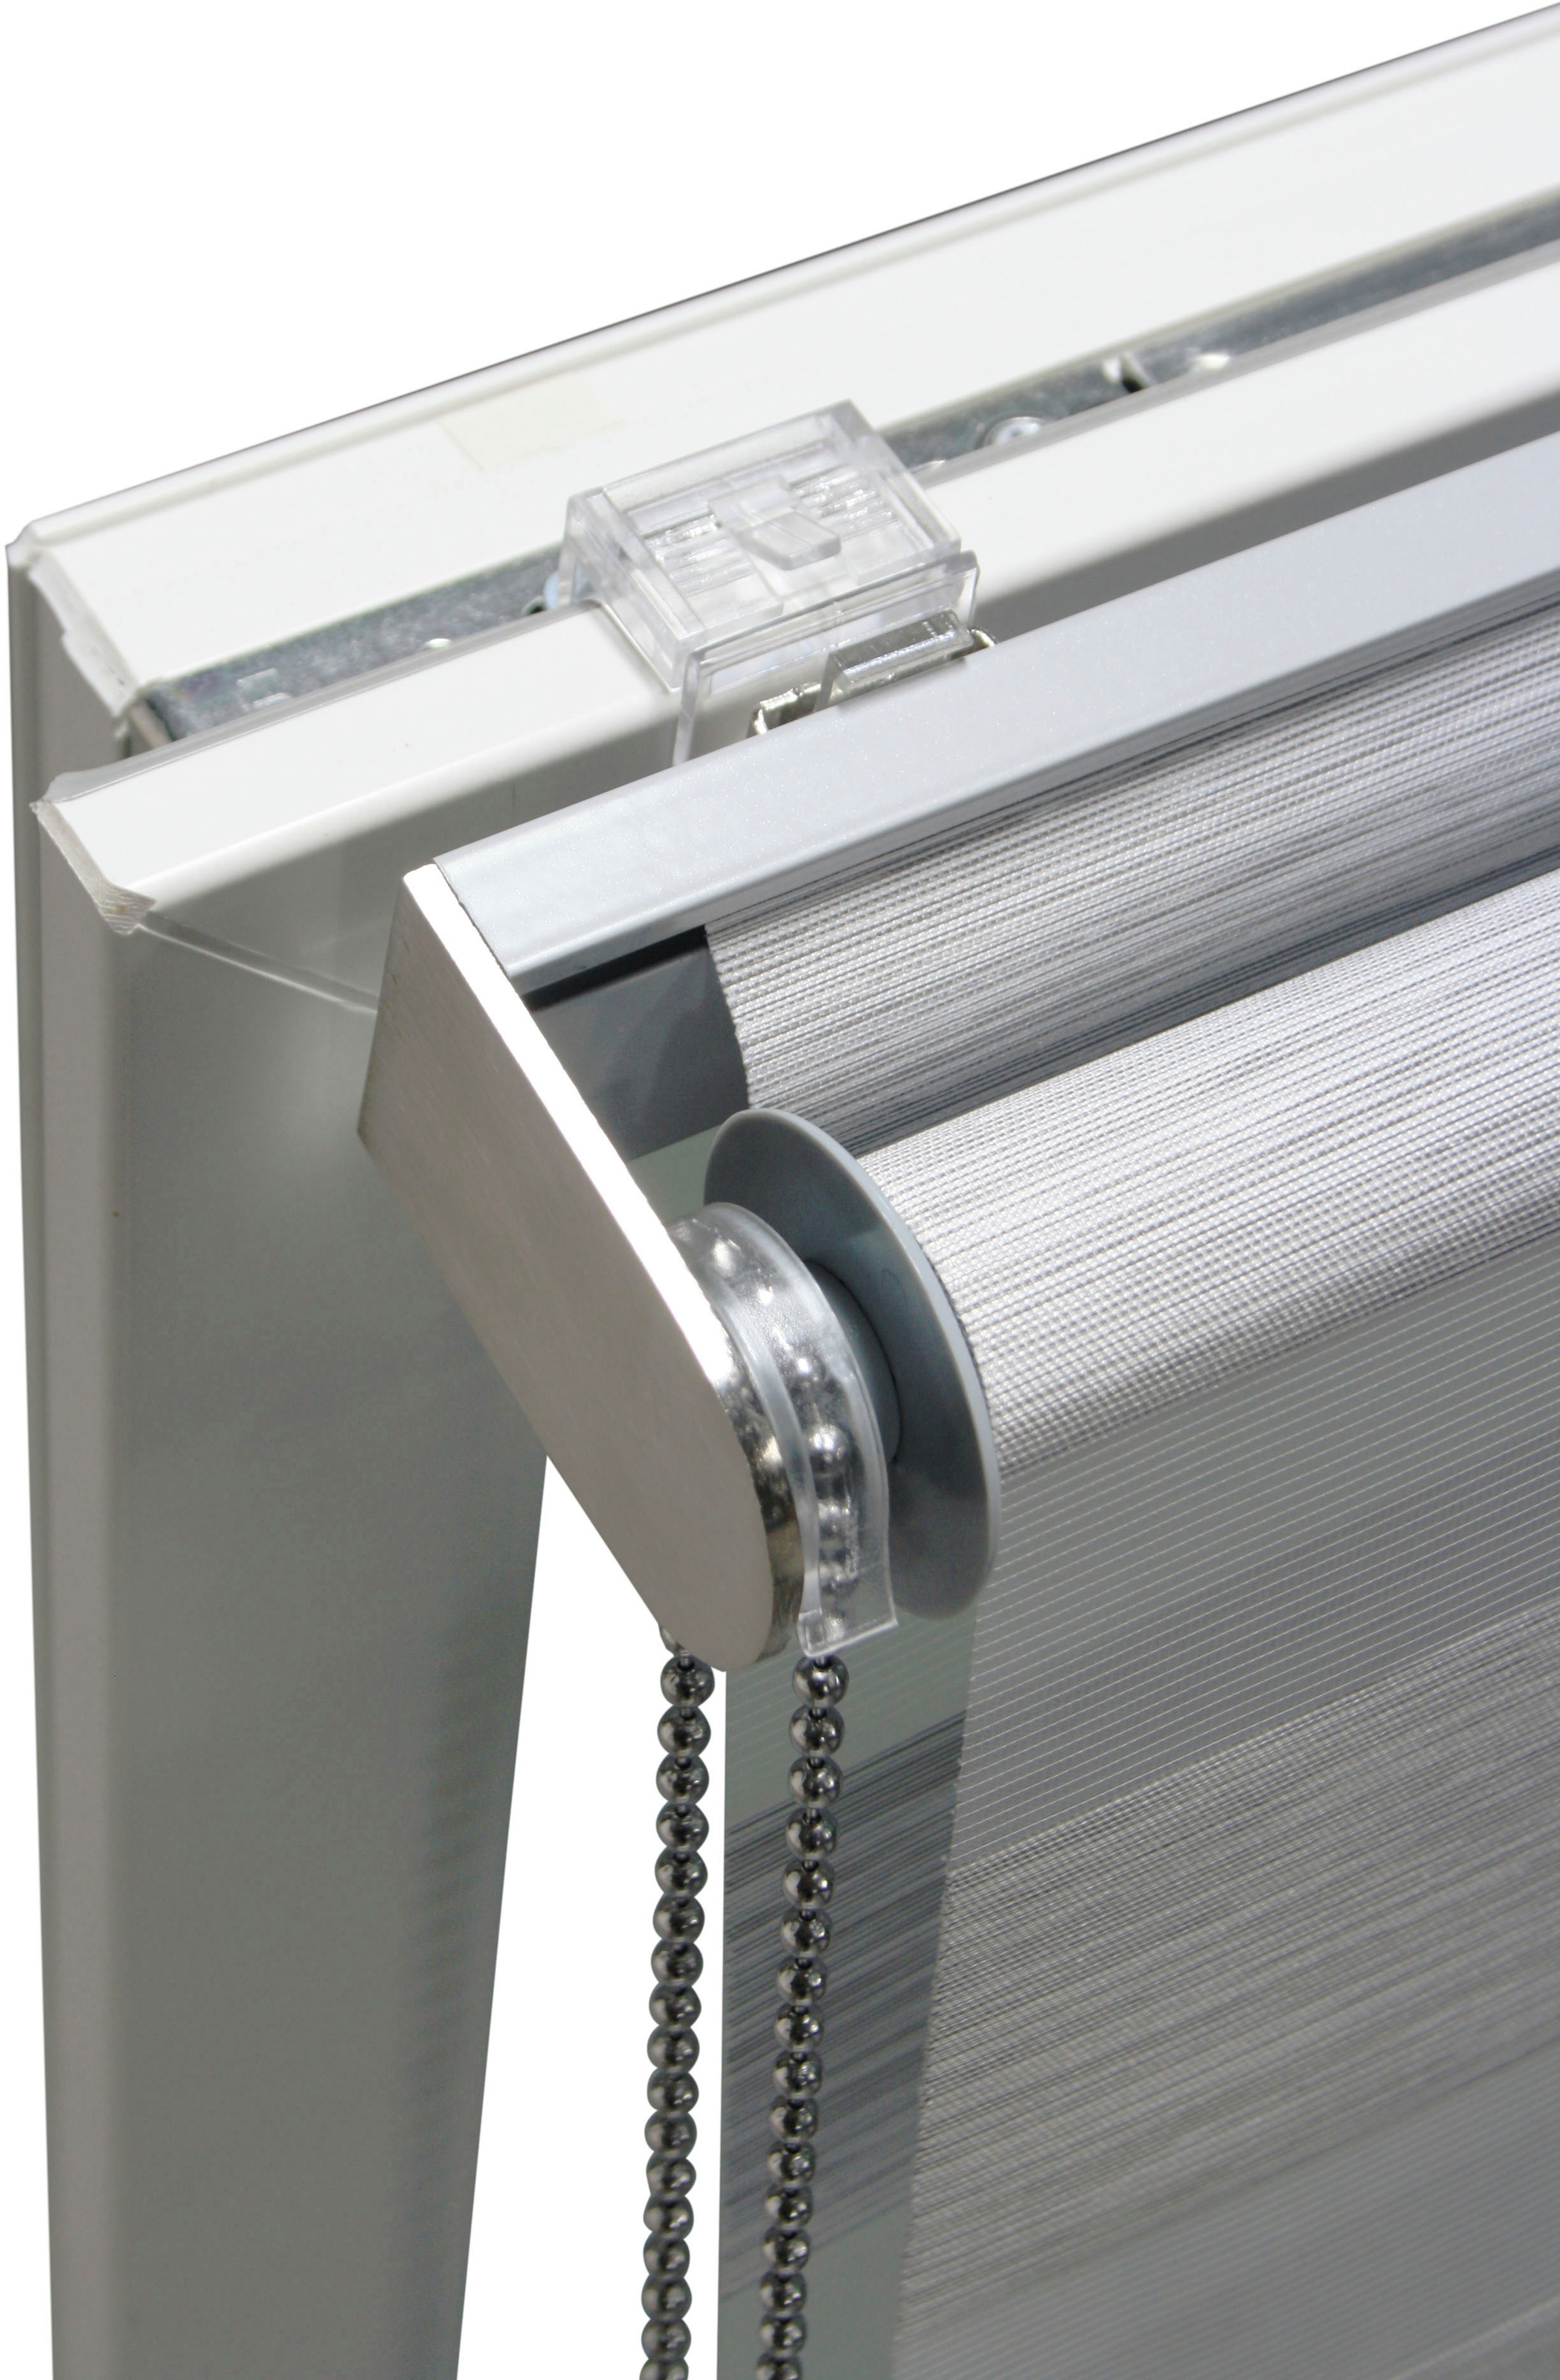 GARDINIA Doppelrollo »Doppelrollo de luxe«, halbtransparent, hochwertiges Gesamtkonzept mit silbernen Metallkomponenten